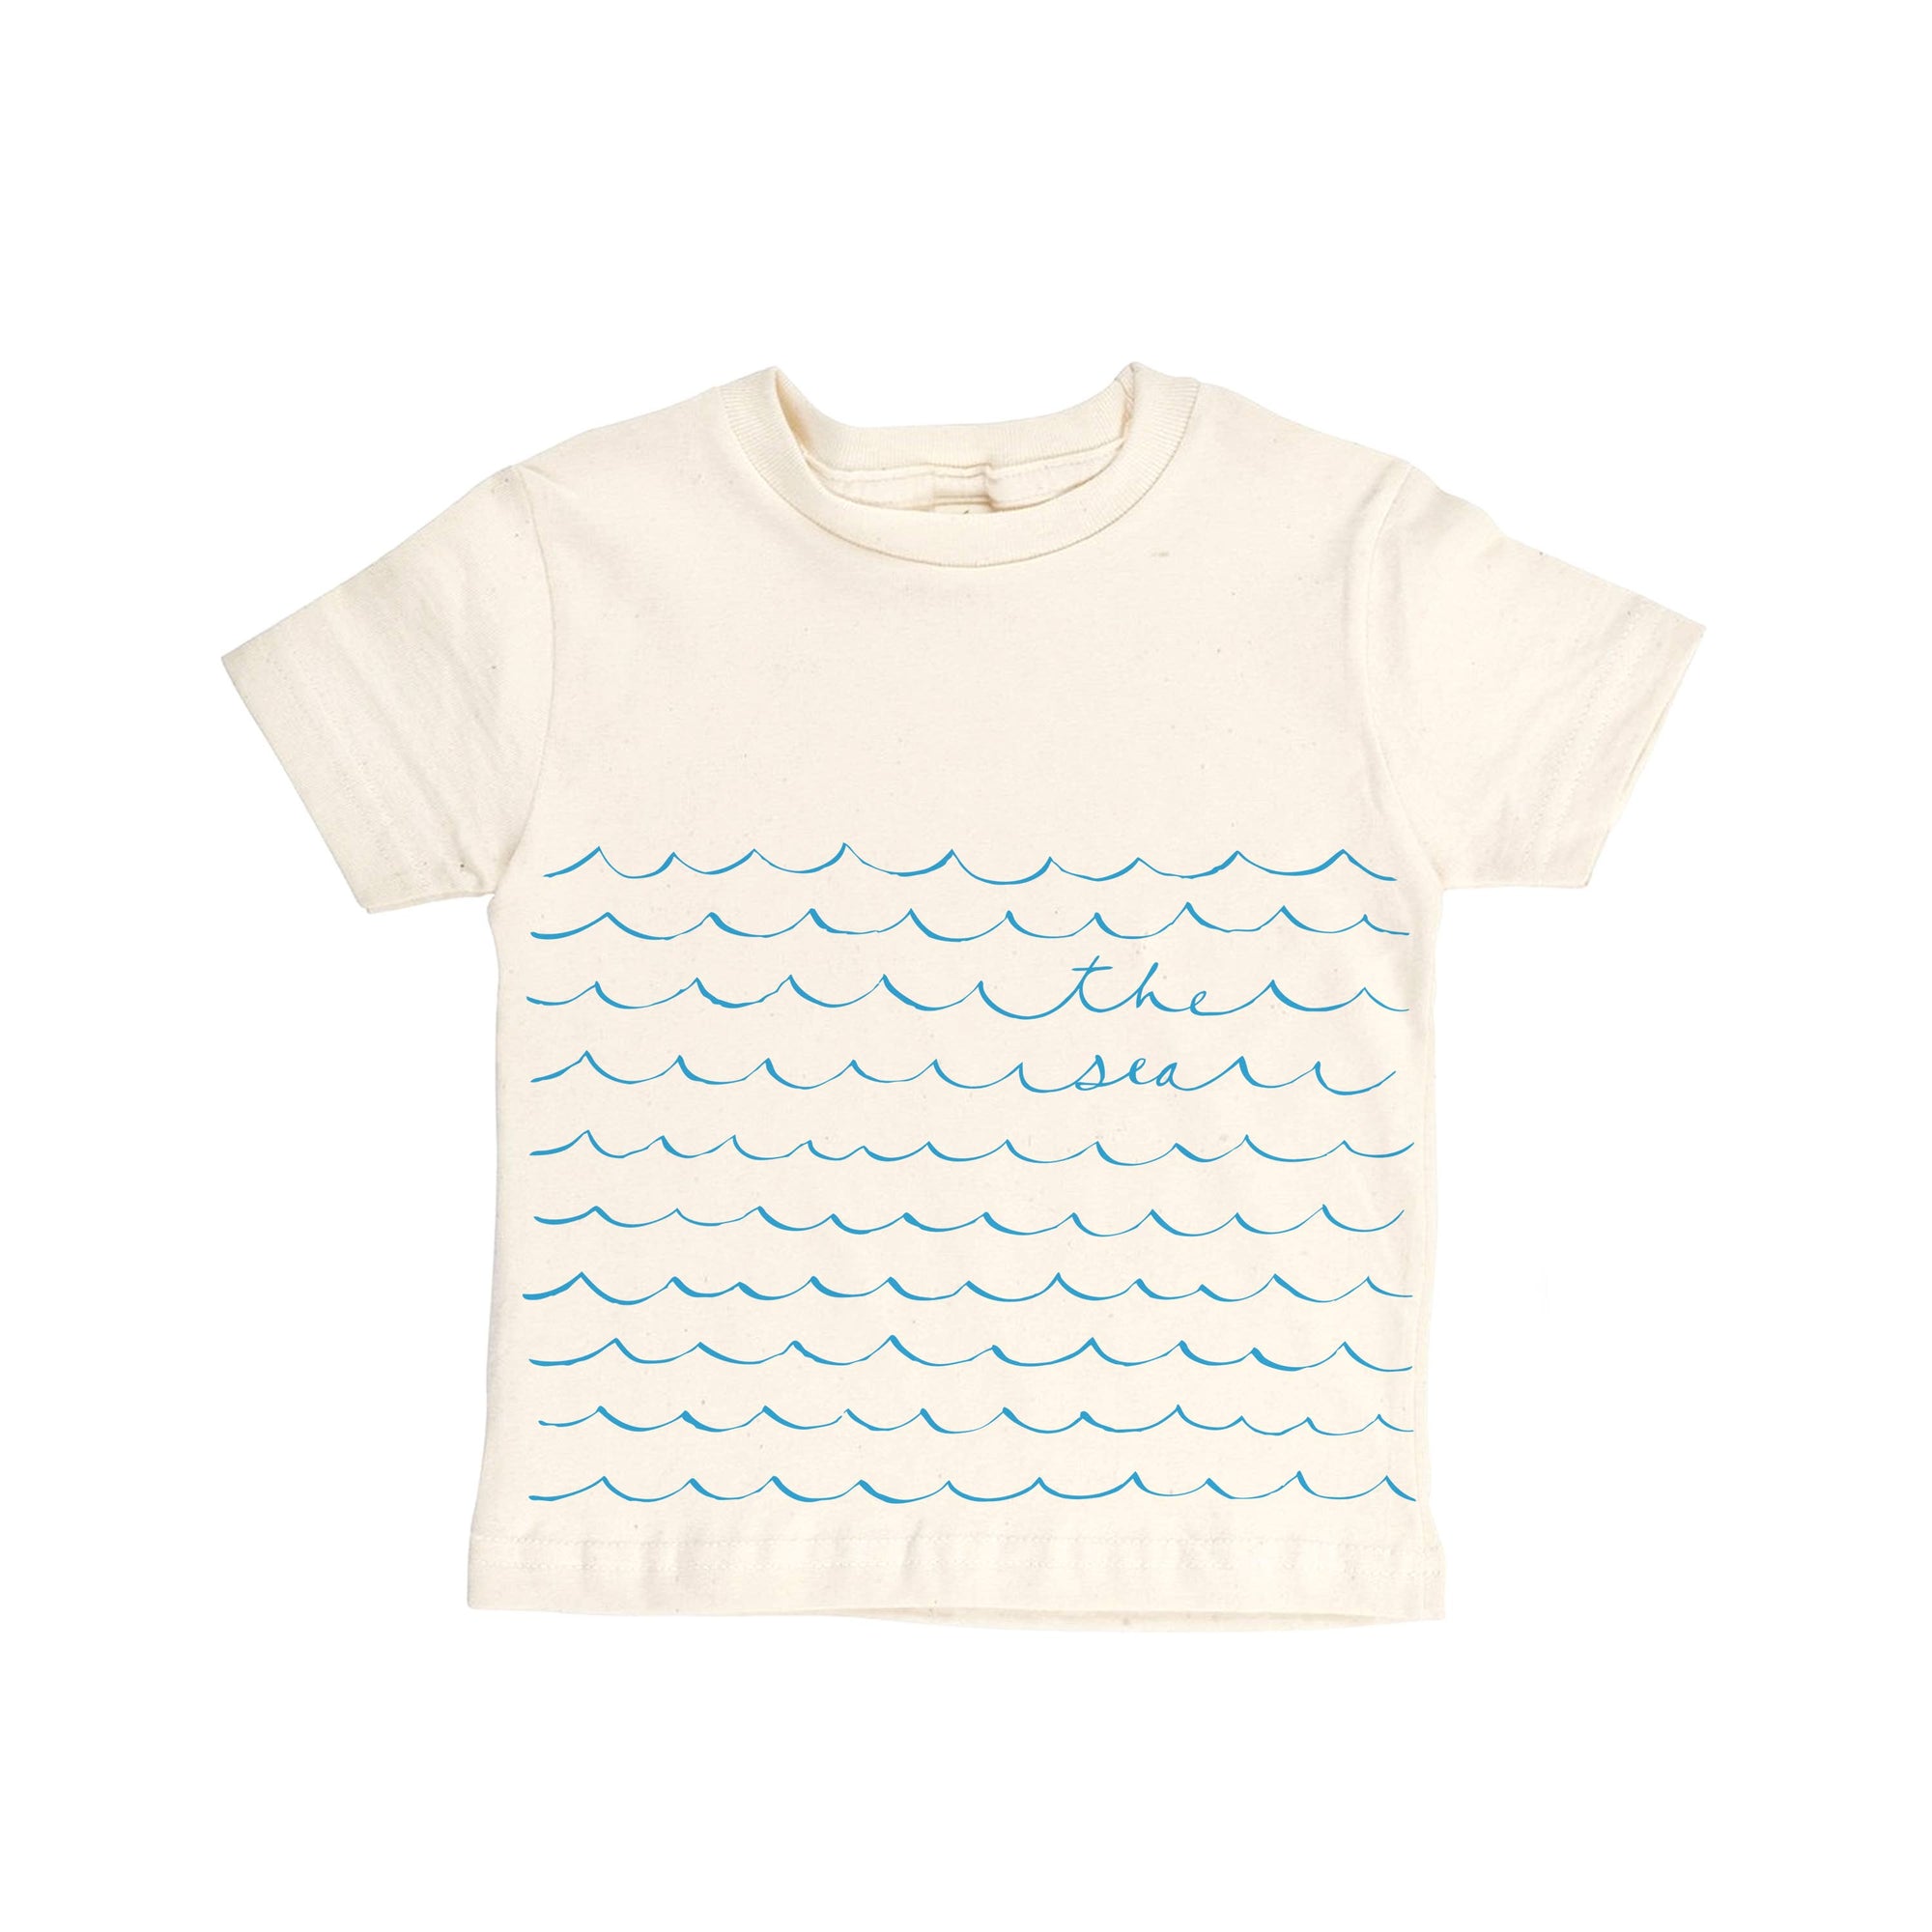 The Sea T-Shirt